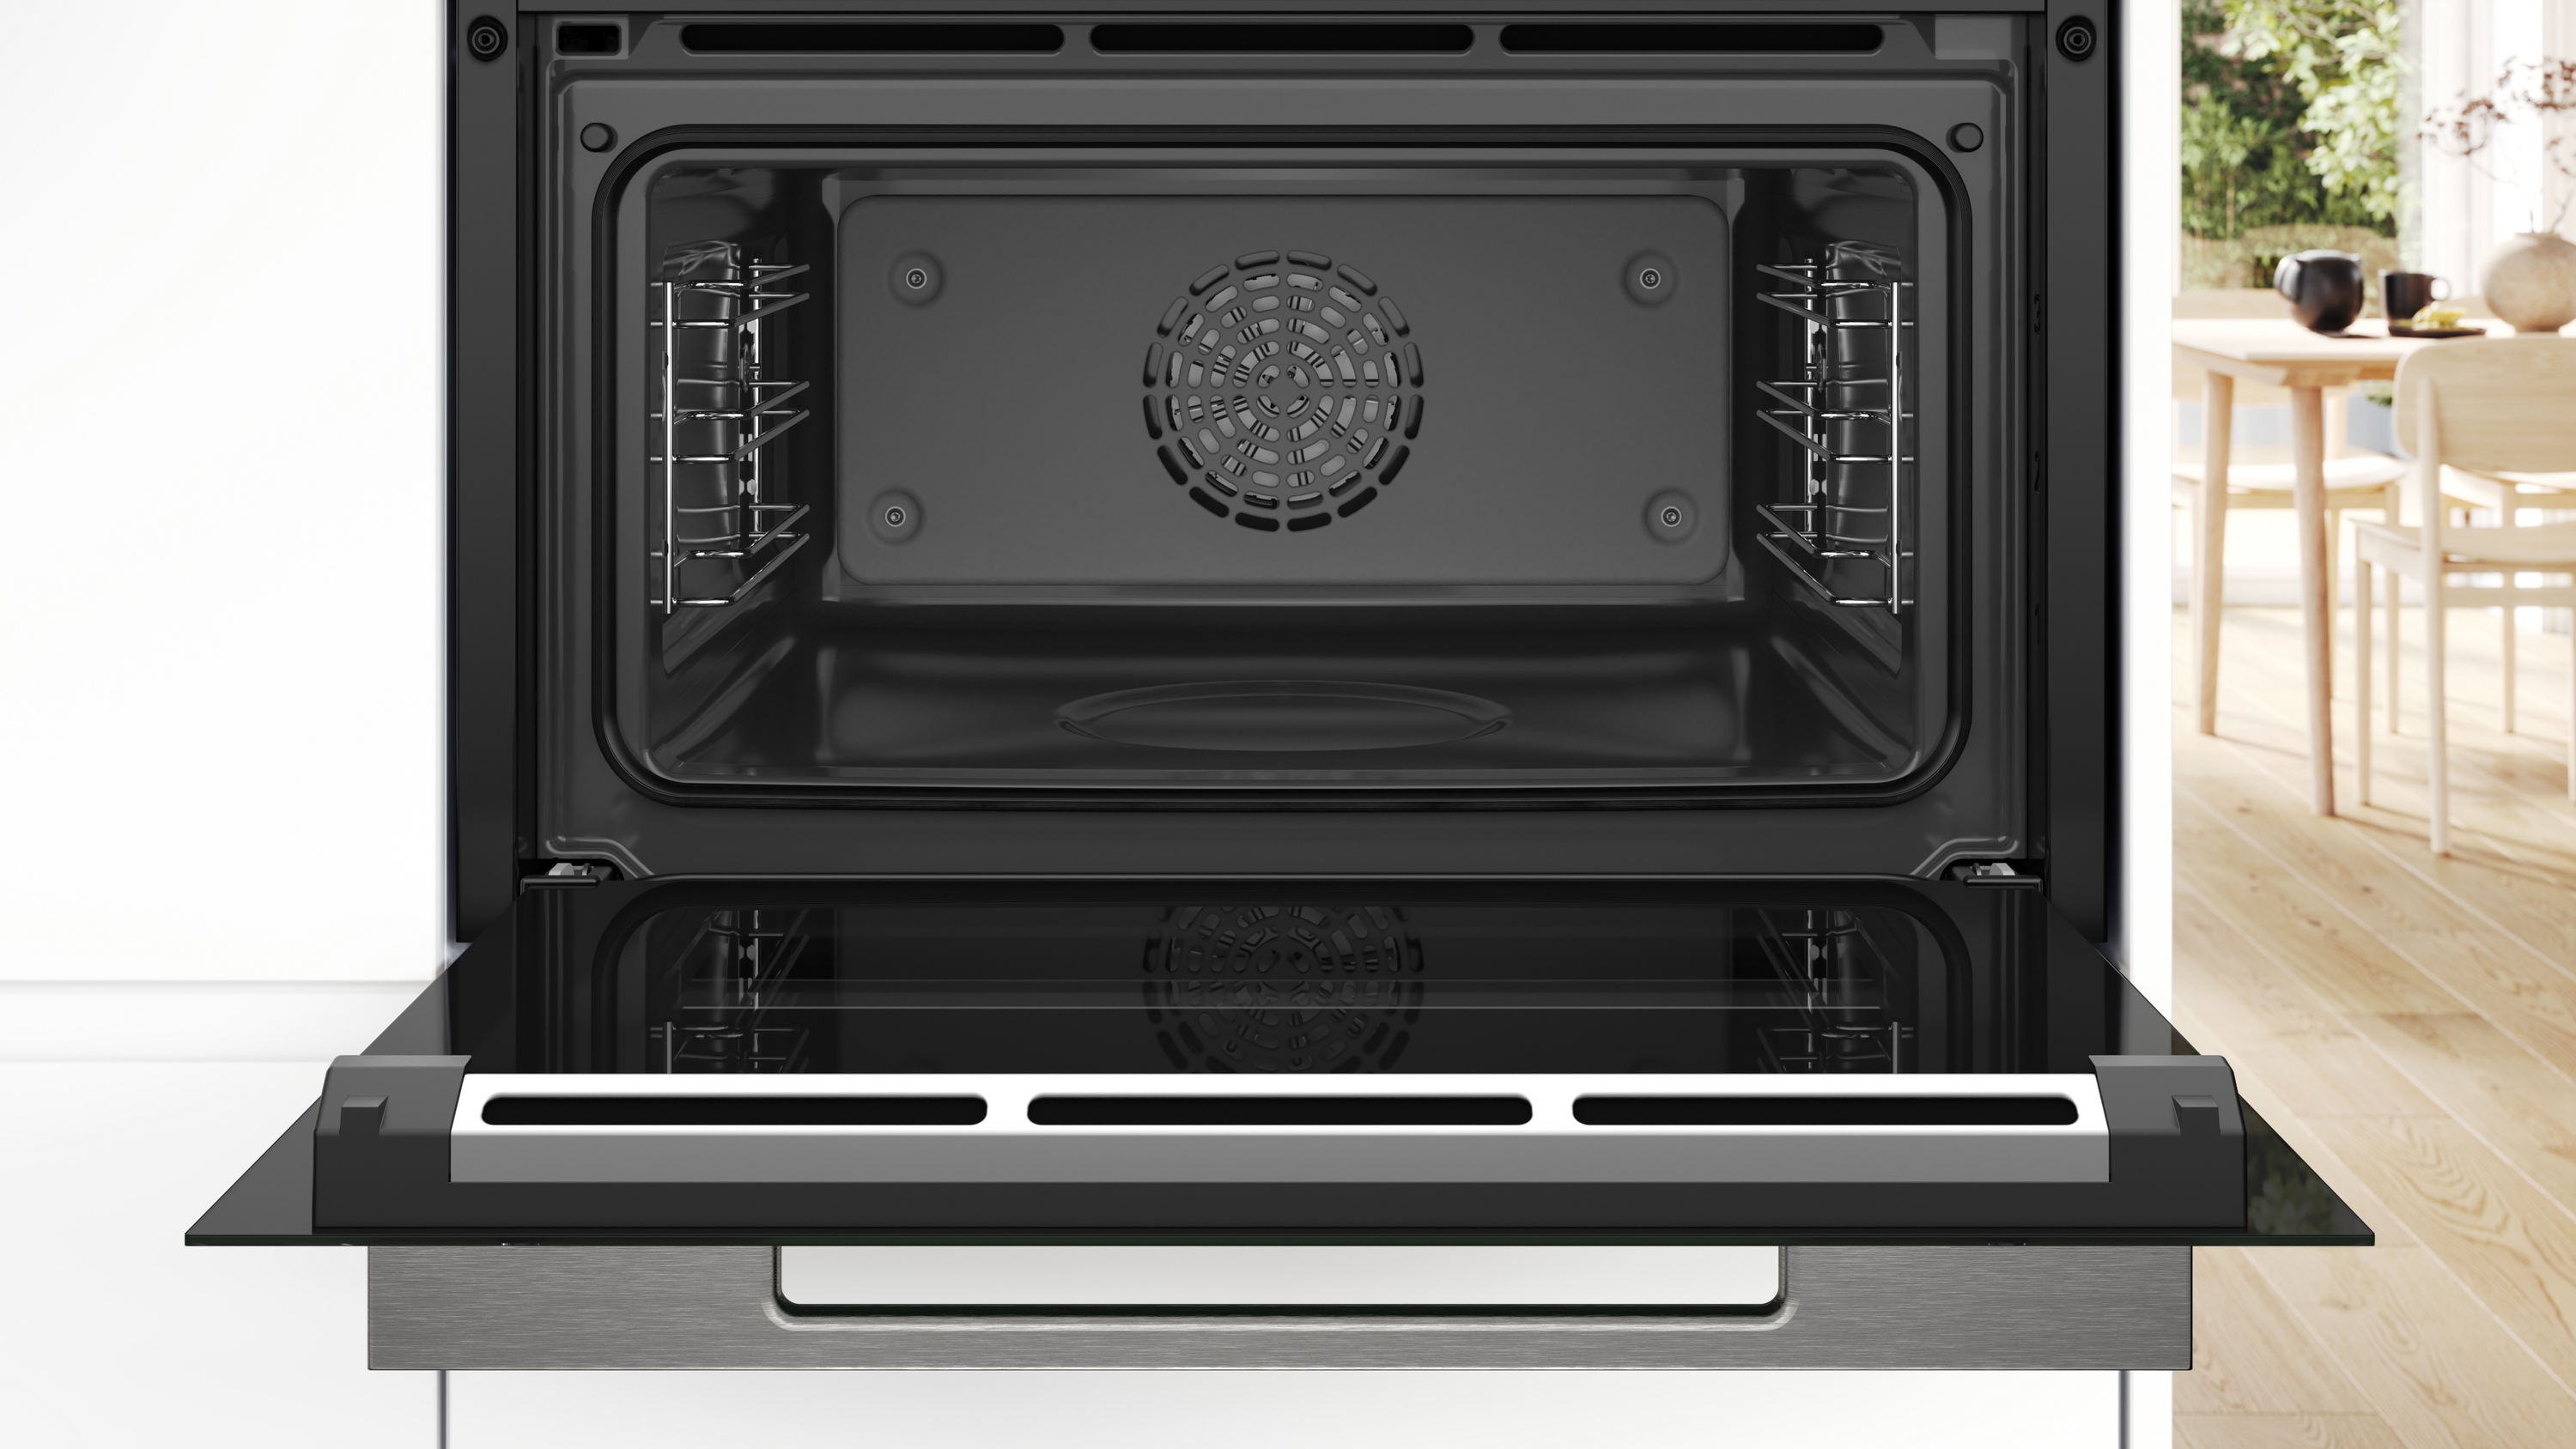 Serija 8, Ugradna kompaktna rerna sa funkcijom pečenja na pari, 60 x 45 cm, Crna, CSG7361B1